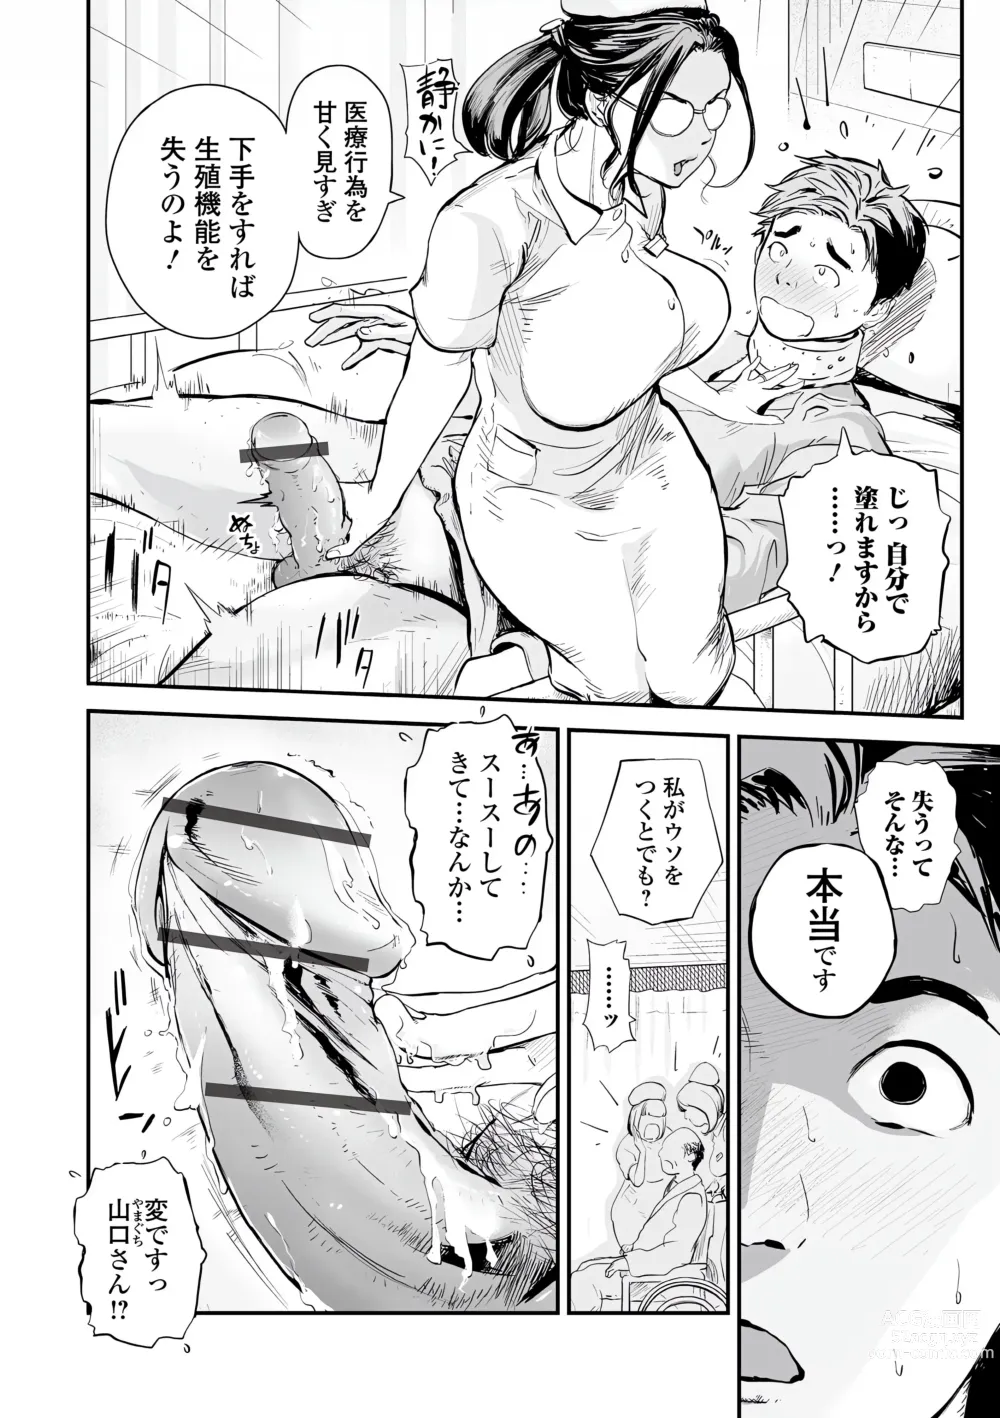 Page 8 of manga Web Comic Toutetsu Vol. 77